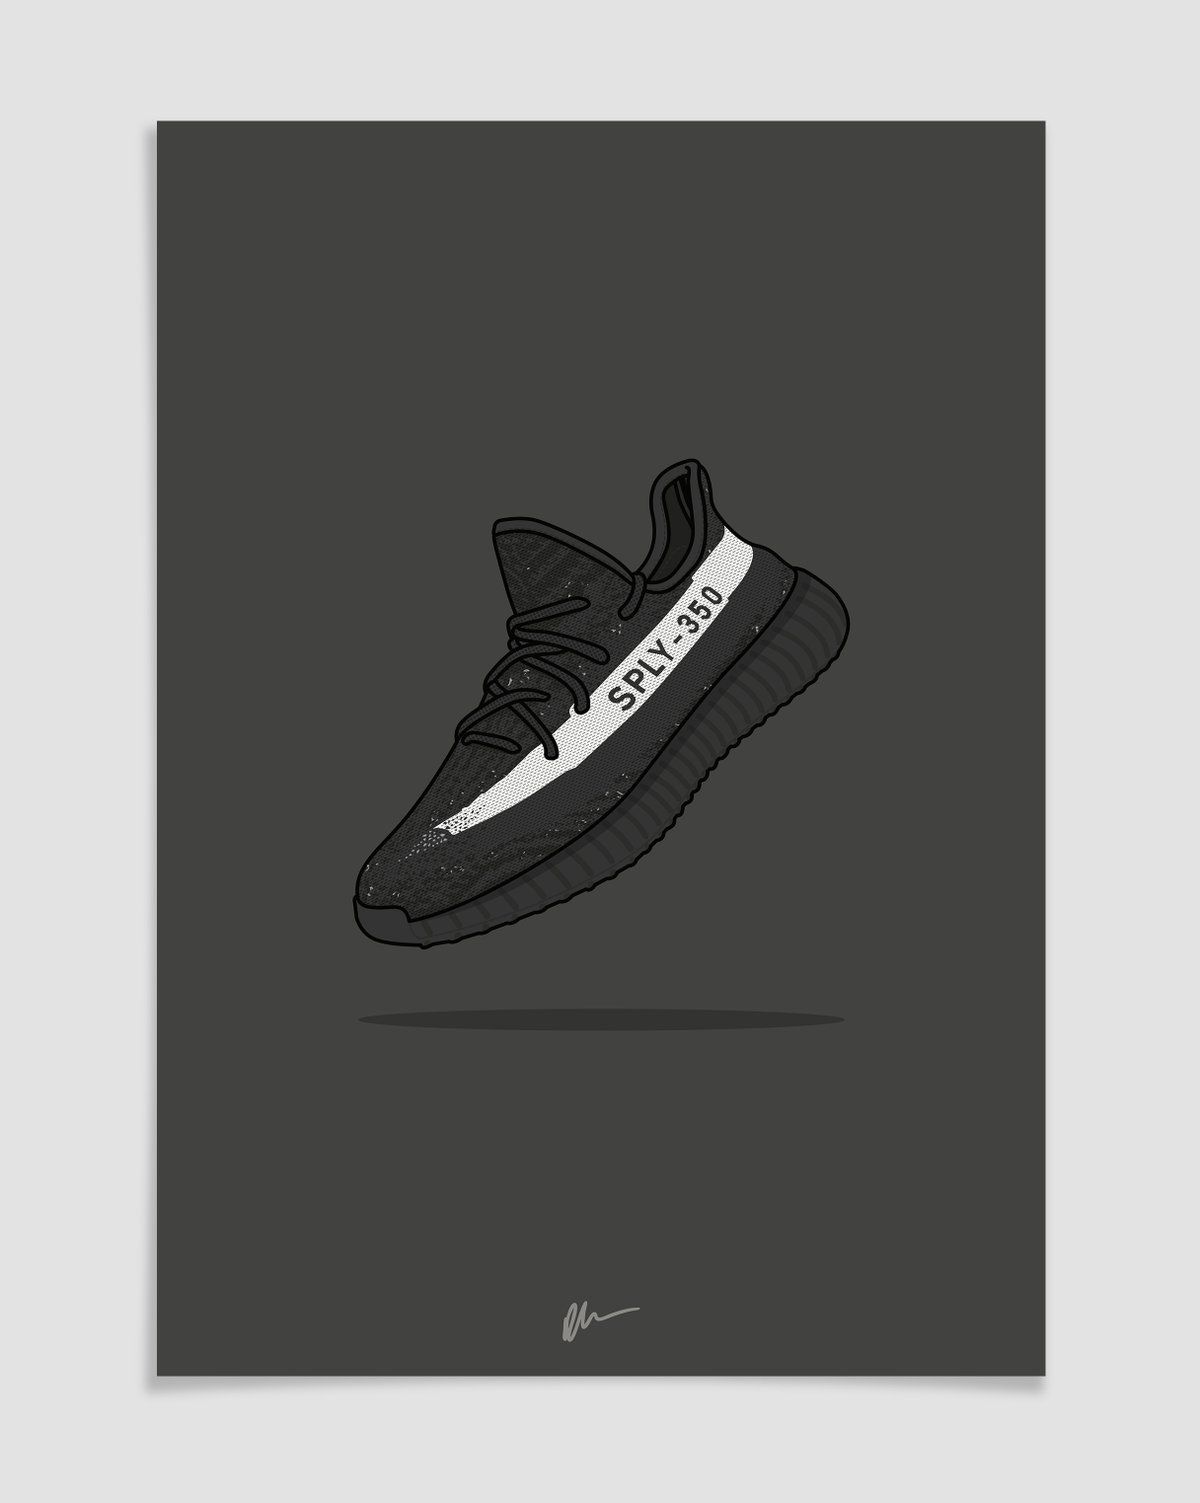 Image of Yeezy 350 v2 Black White Dope art in 2019 Sneakers